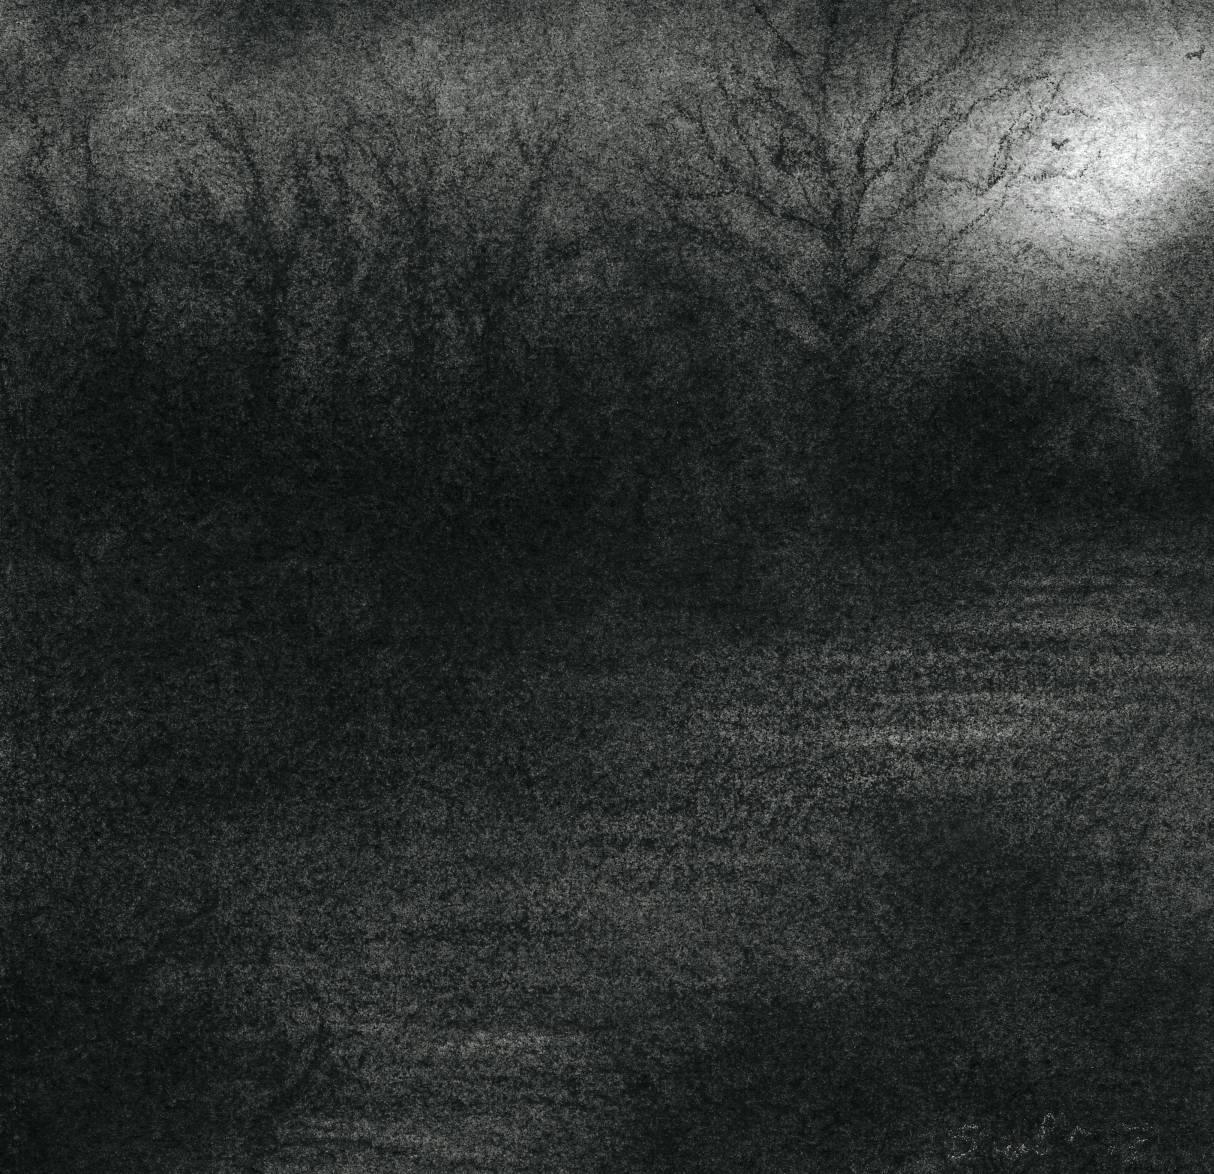 Nocturne VI (Modern Realistic Charcoal Drawing of Moonlit Forest Landscape)